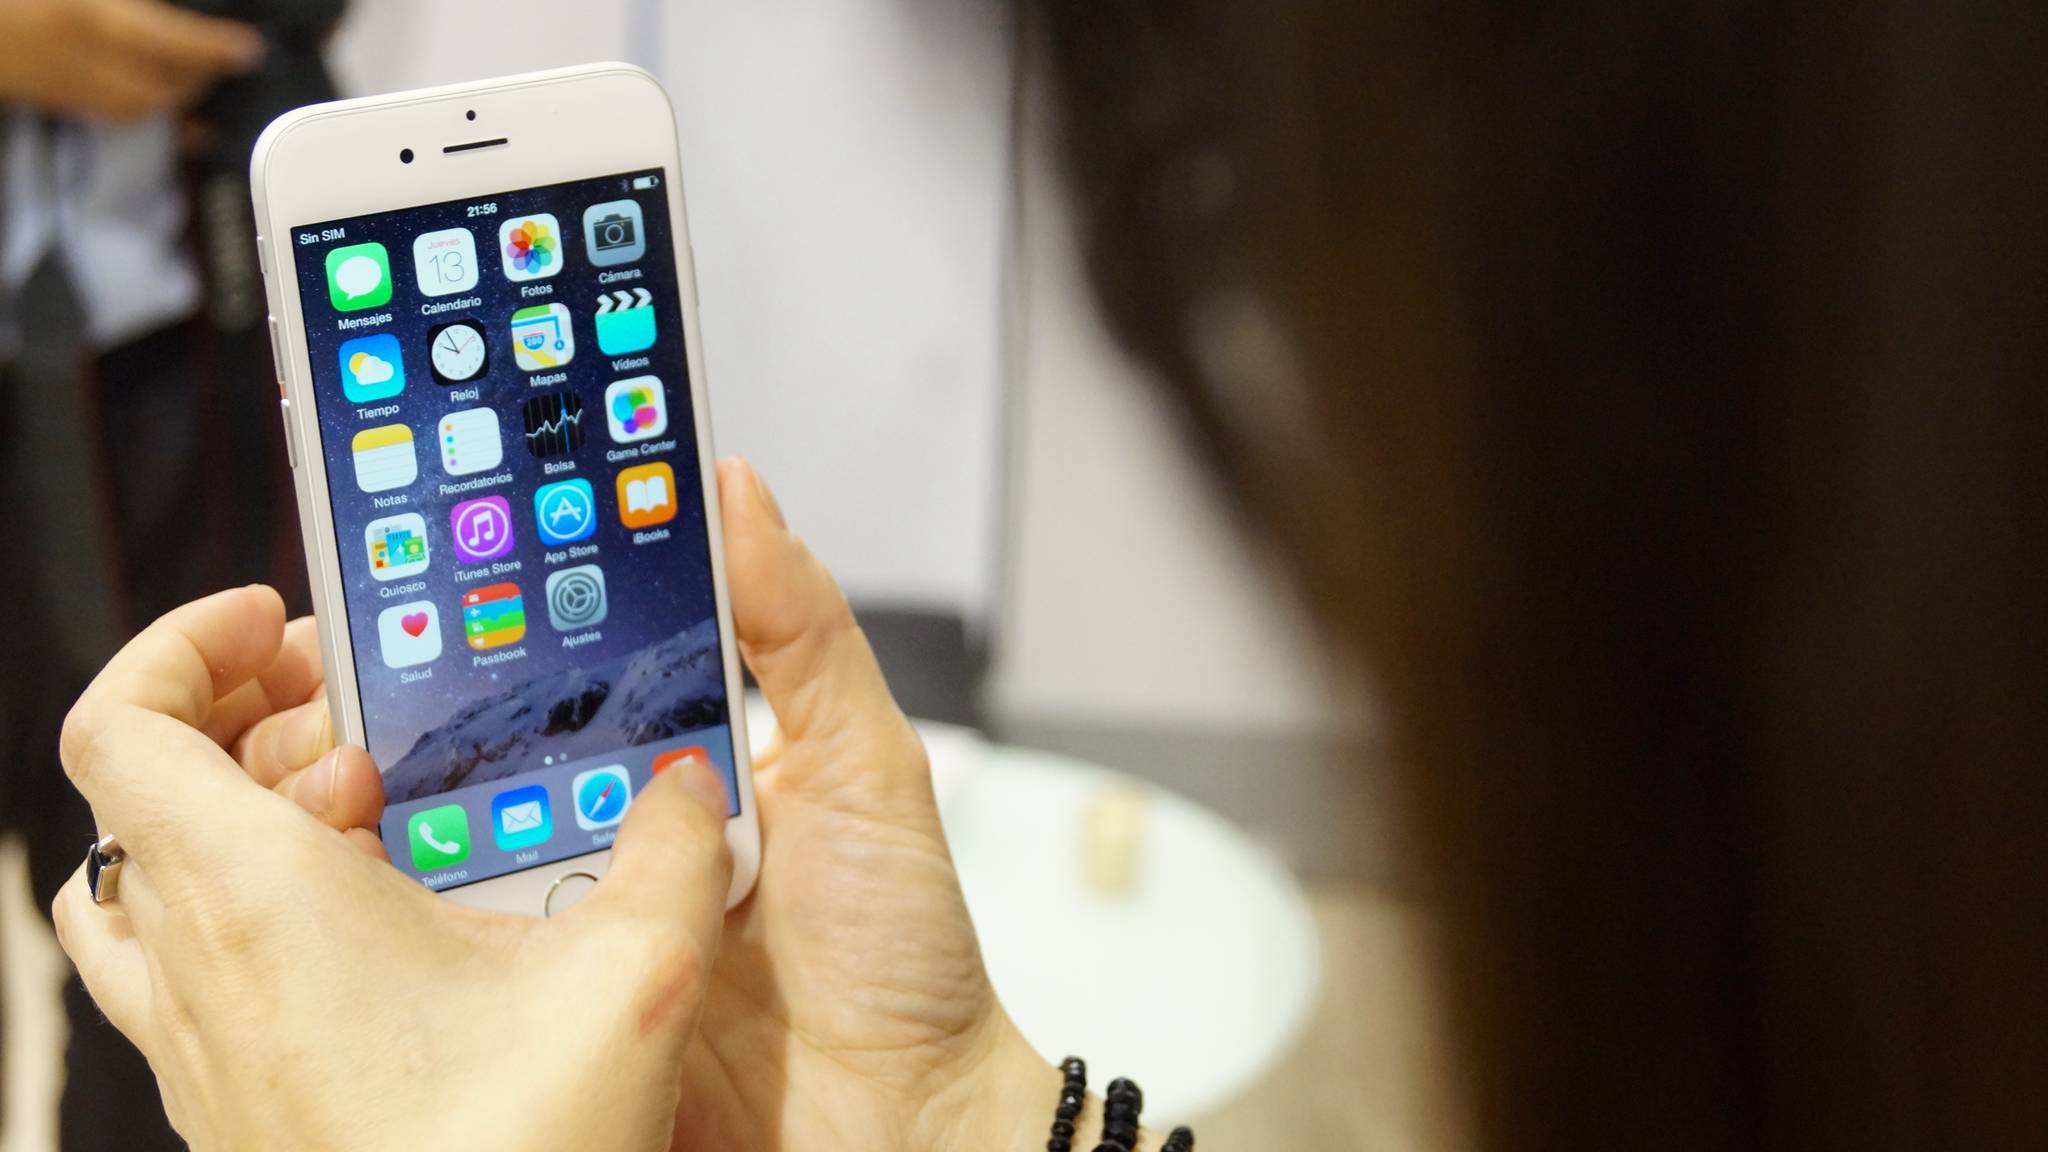 Apple gets behind mobile ad blocking